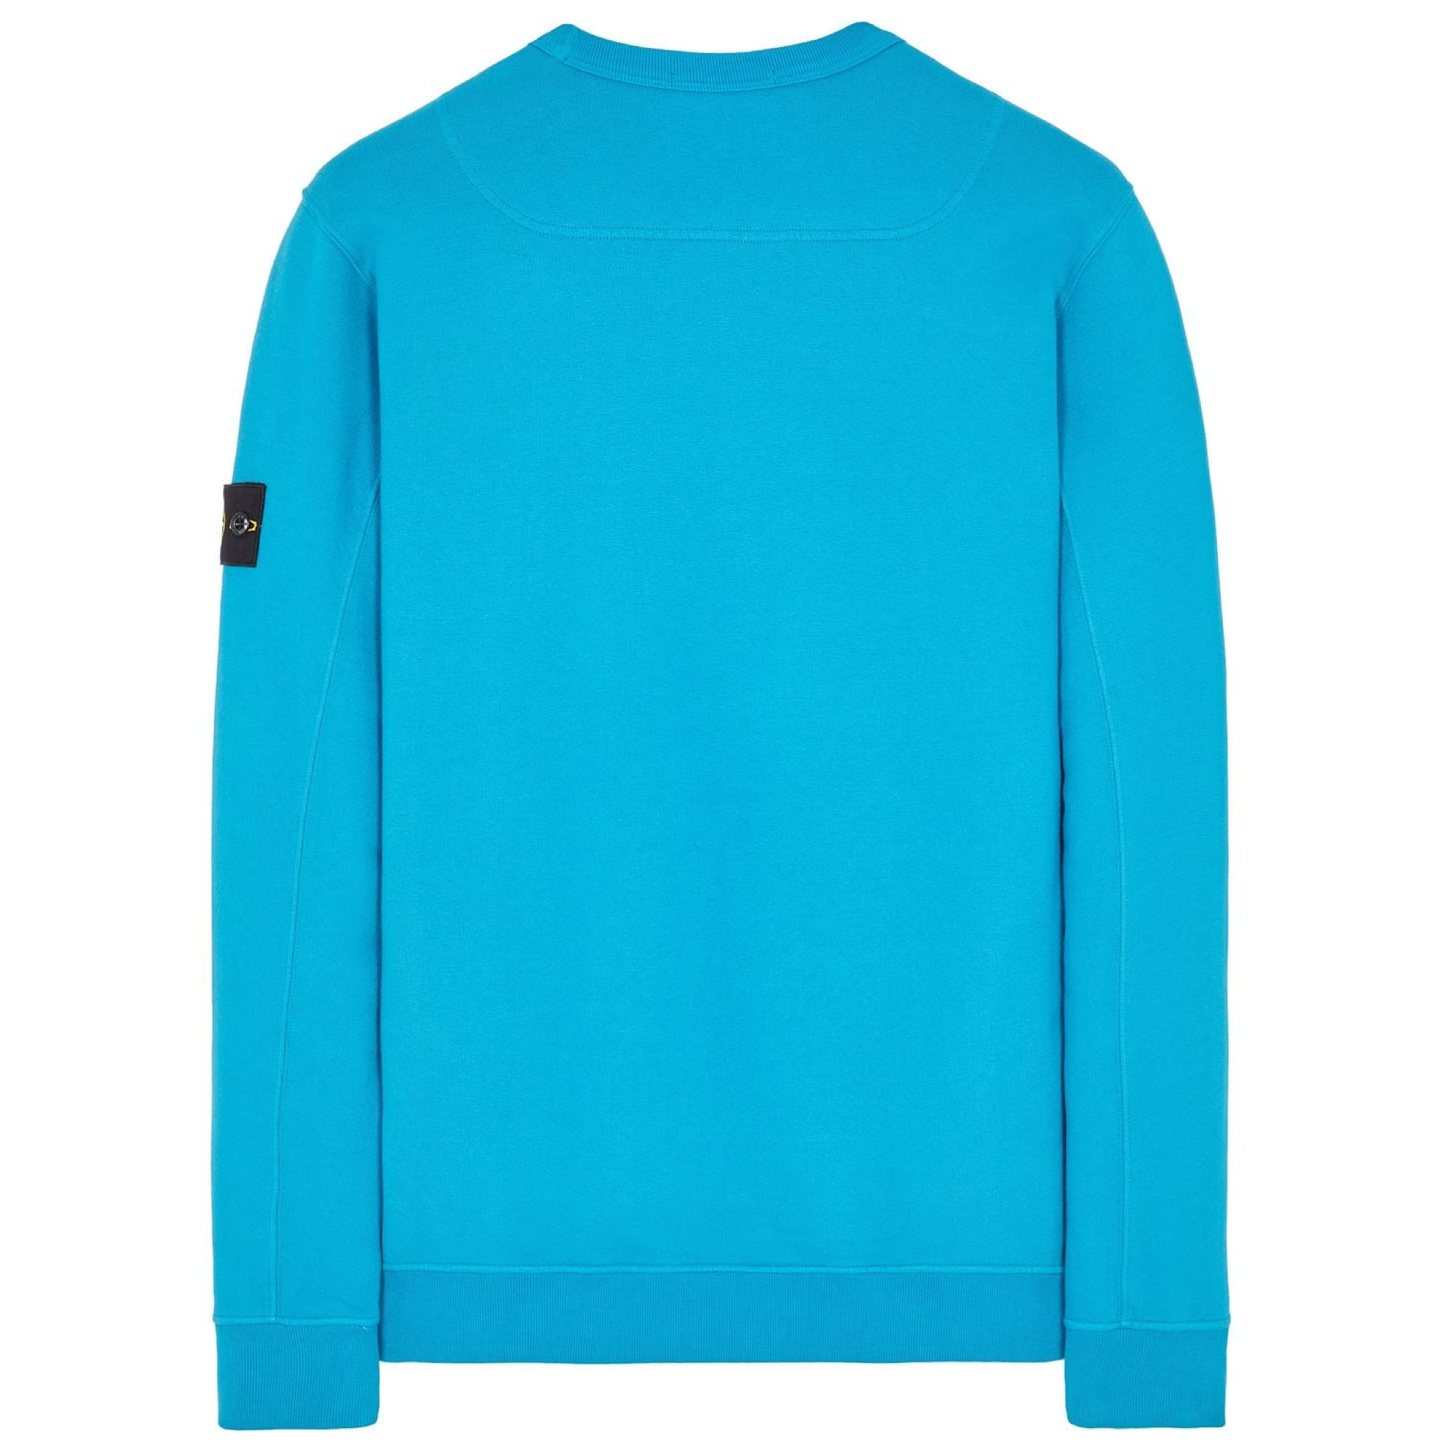 Stone Island Turquoise Garment Dyed Sweatshirt - DANYOUNGUK